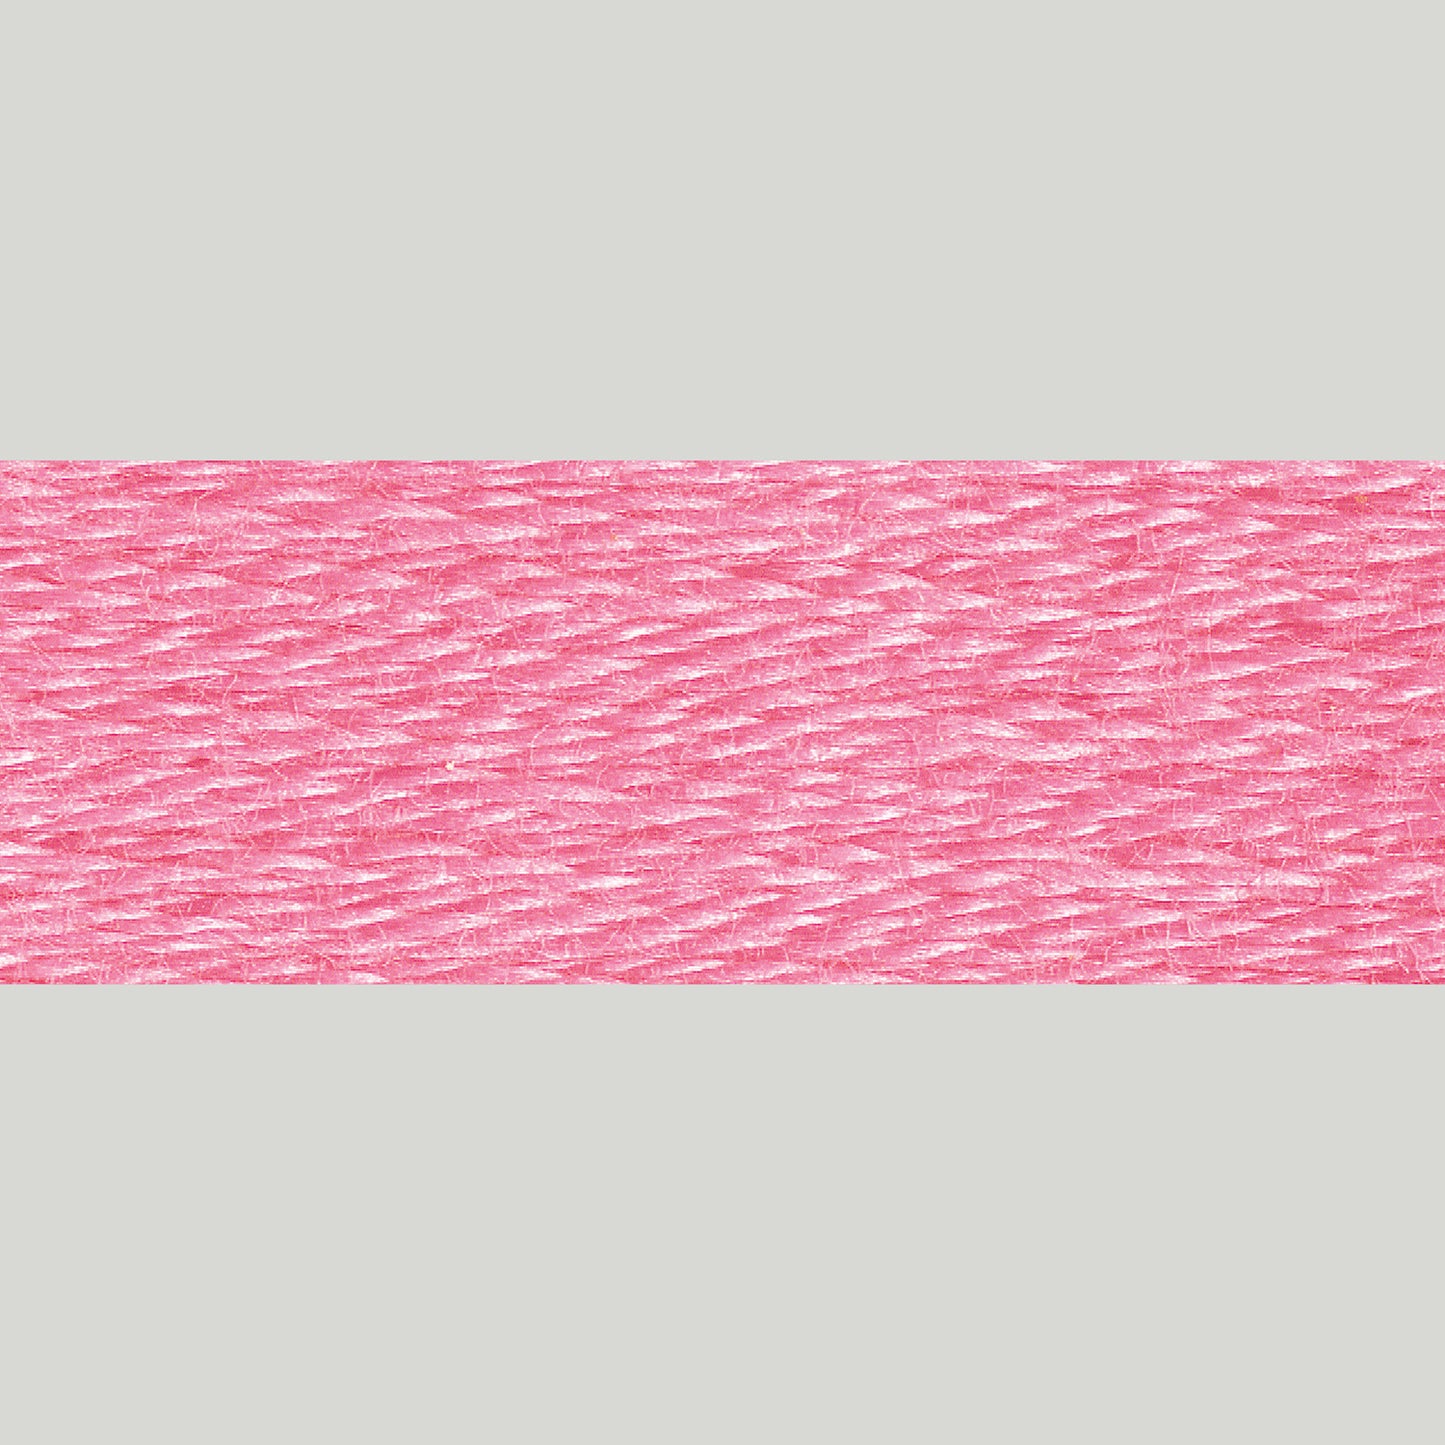 DMC Embroidery Floss - 3806 Light Cyclamen Pink Alternative View #1